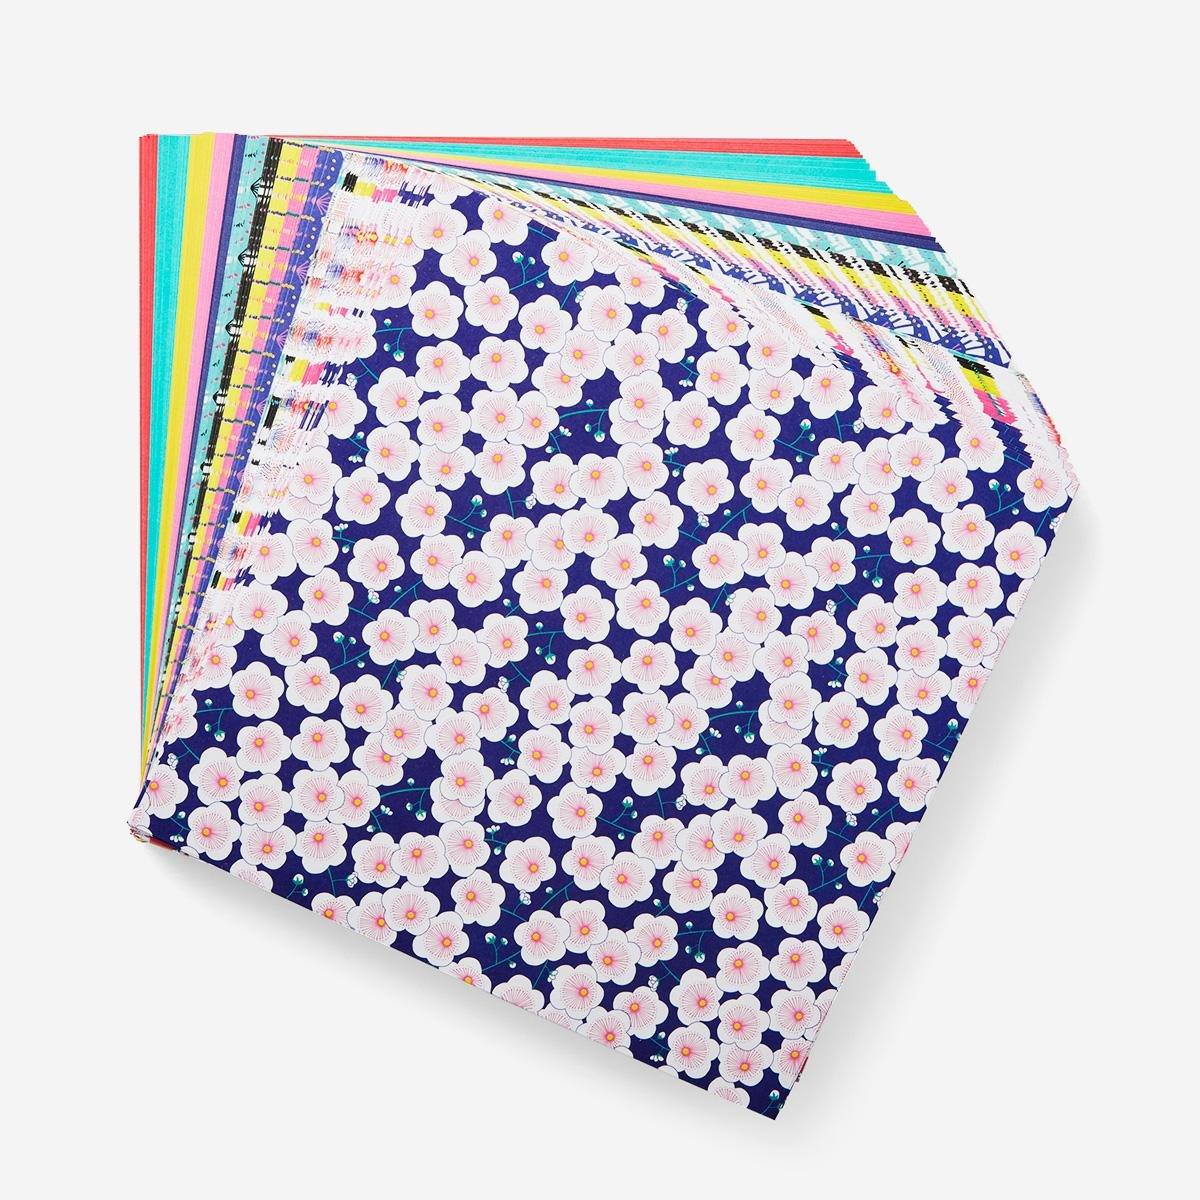 Multicolour origami paper